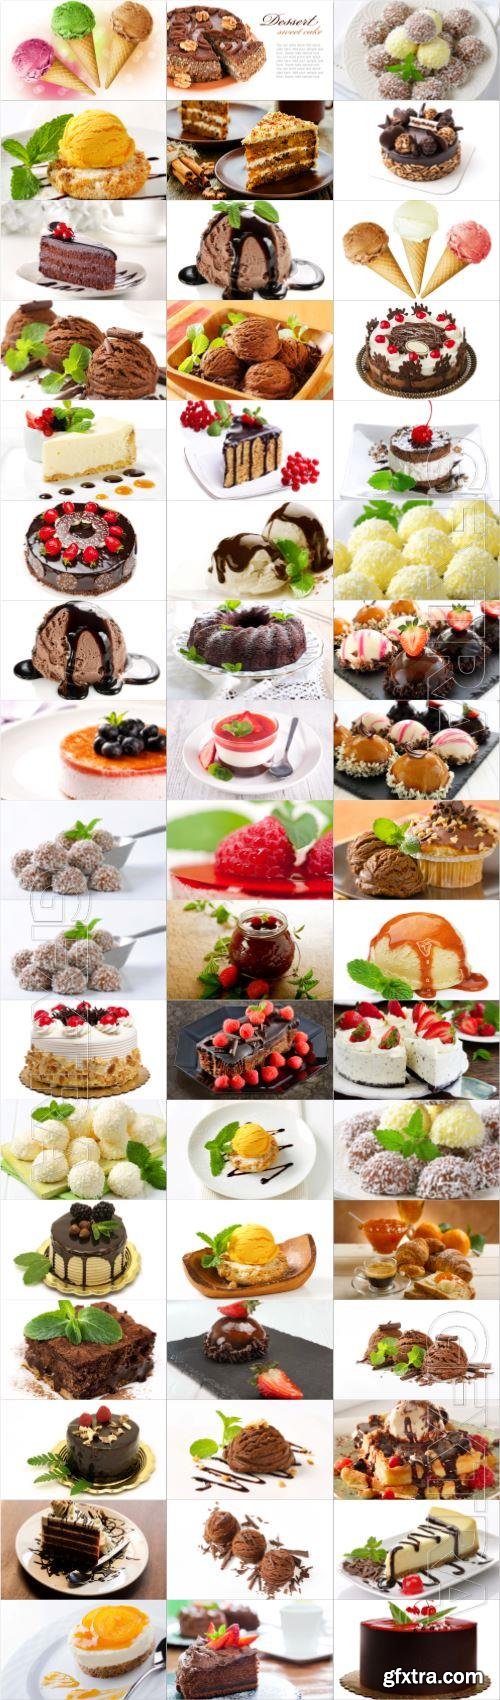 Desserts bundle stock photo 1